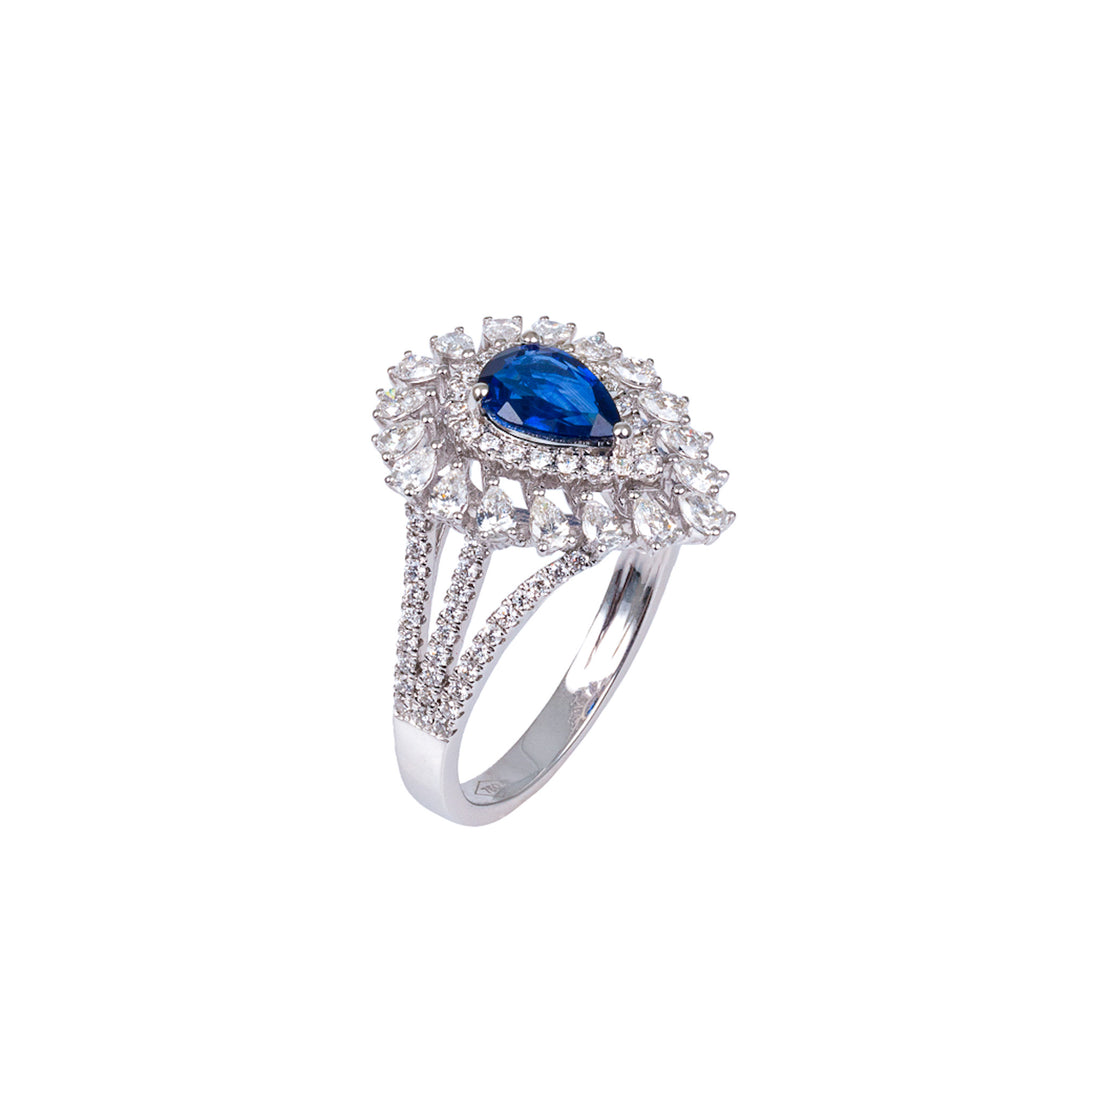 Maison de Joie 18kt White Gold Diamond & Sapphire Ring